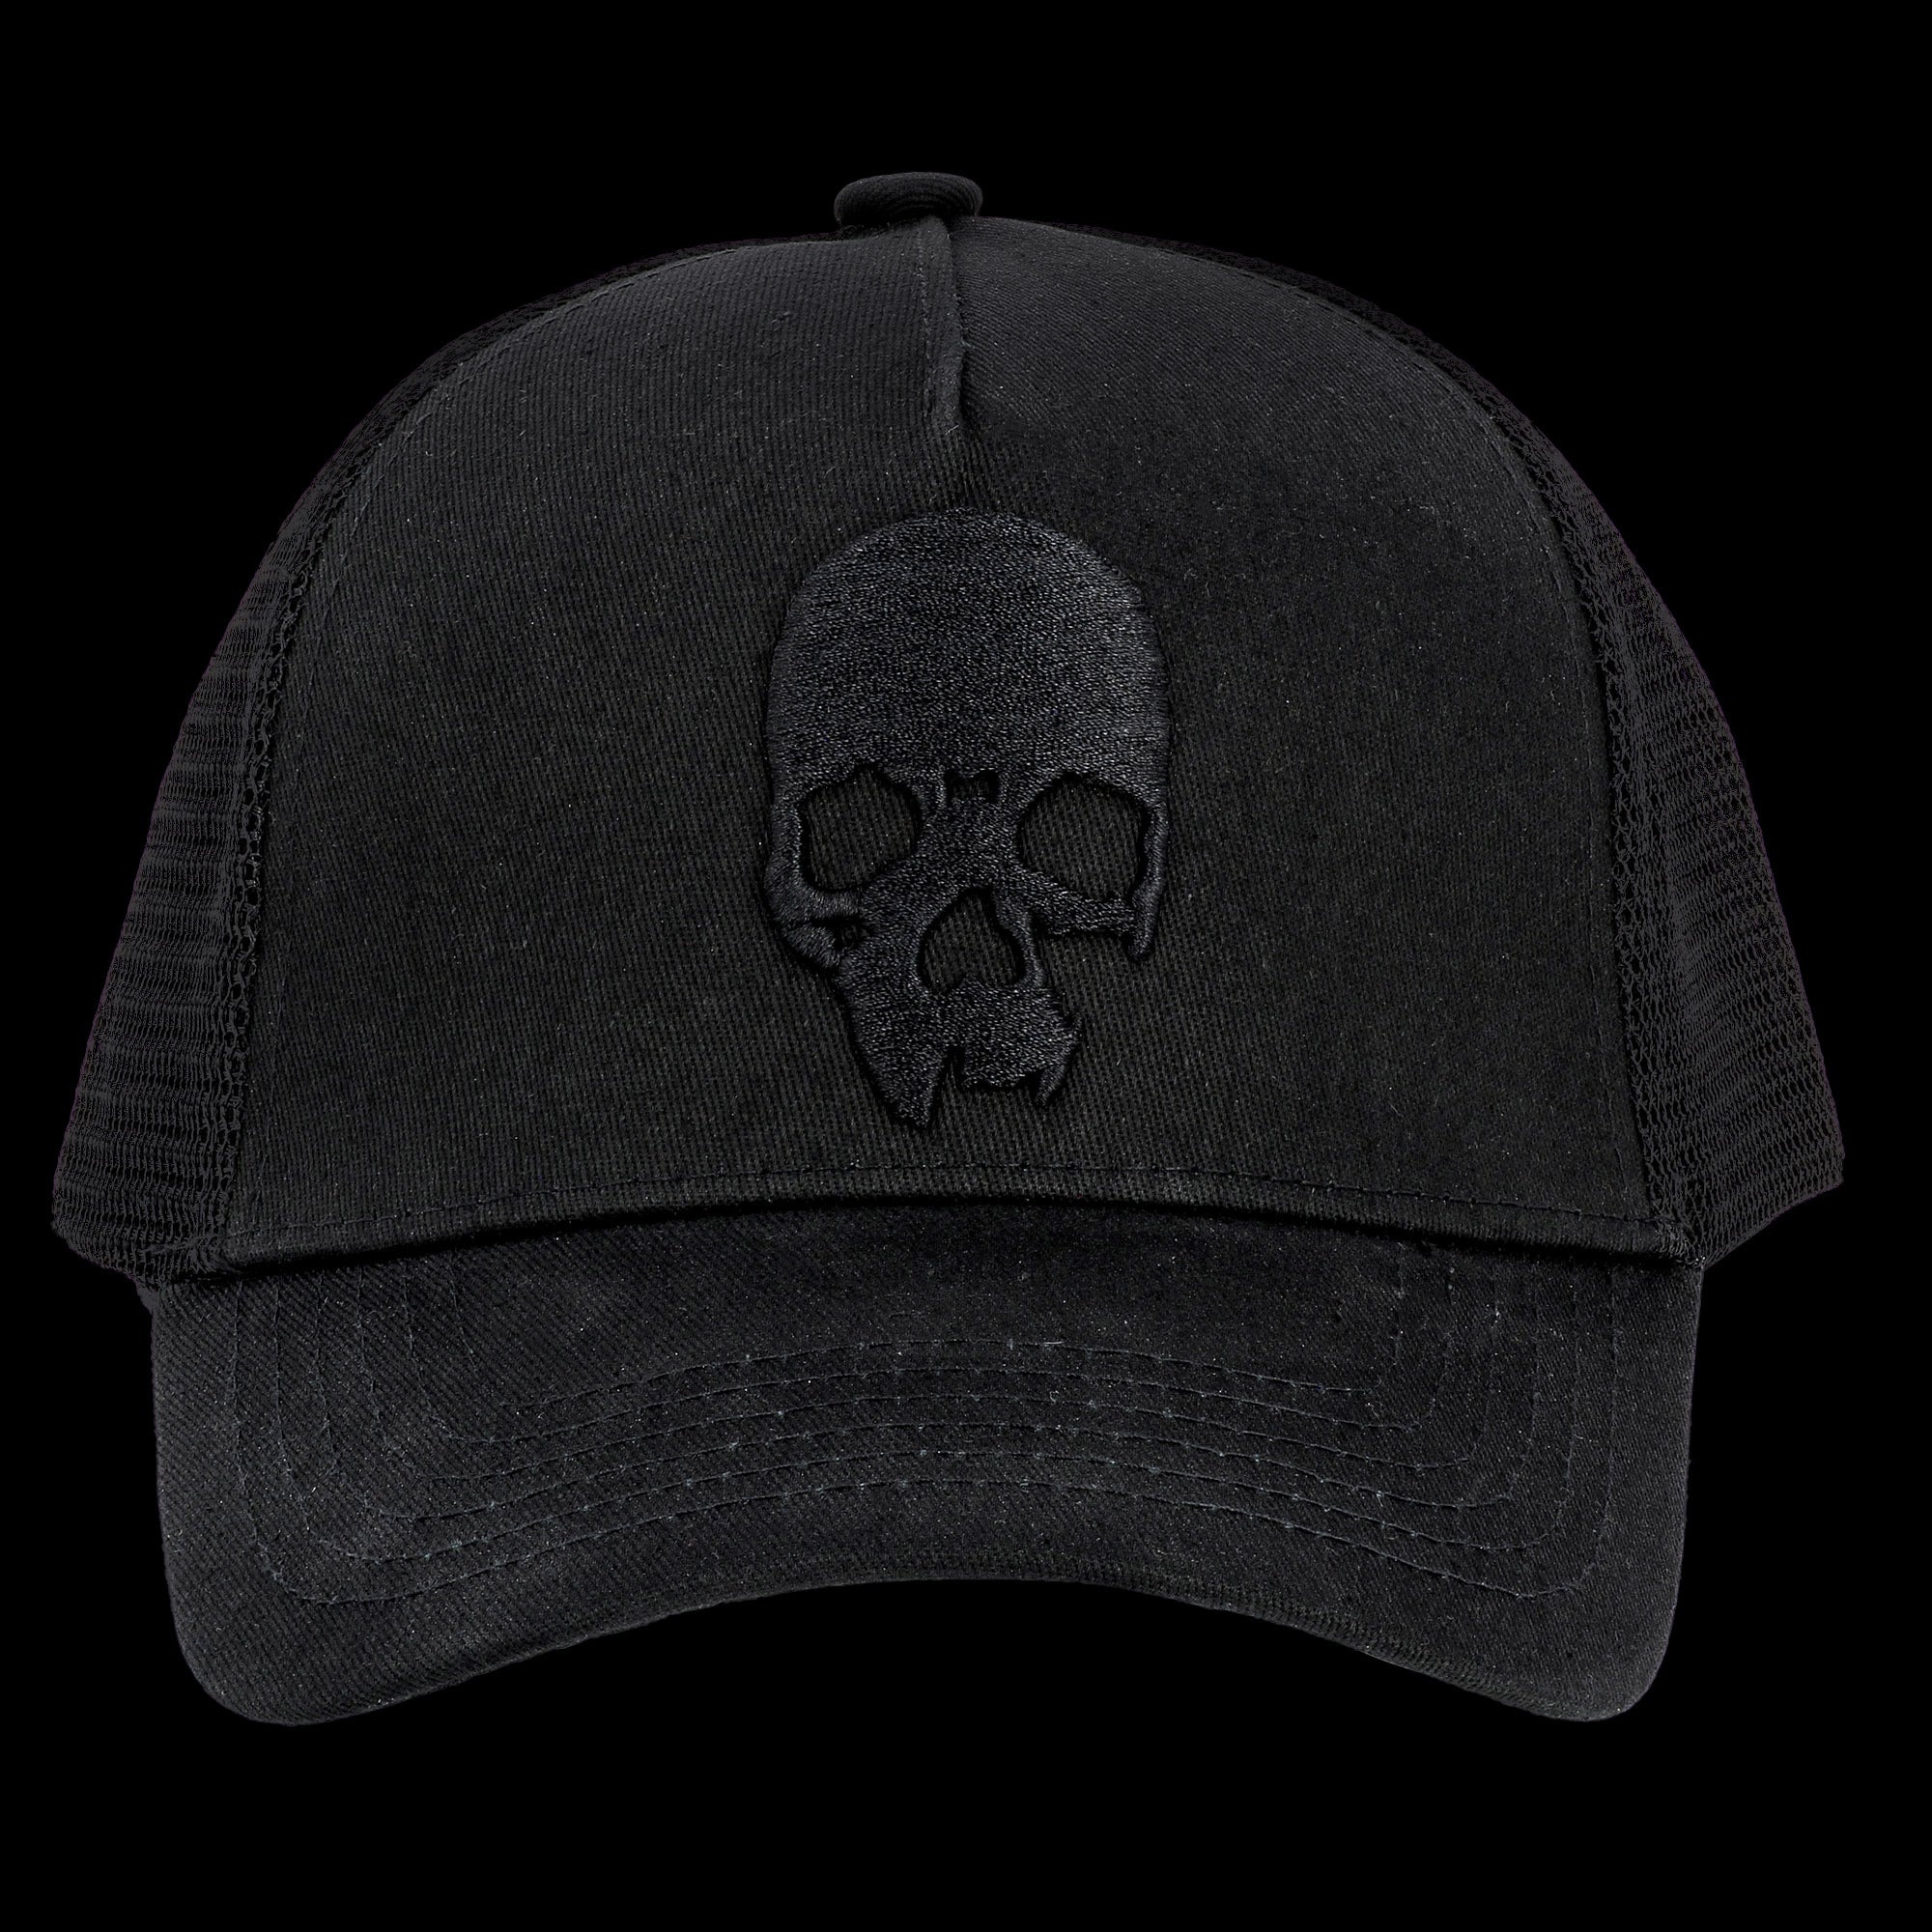 Trucker baseball Cap with 3D Jolly Roger skull embroidery - Black